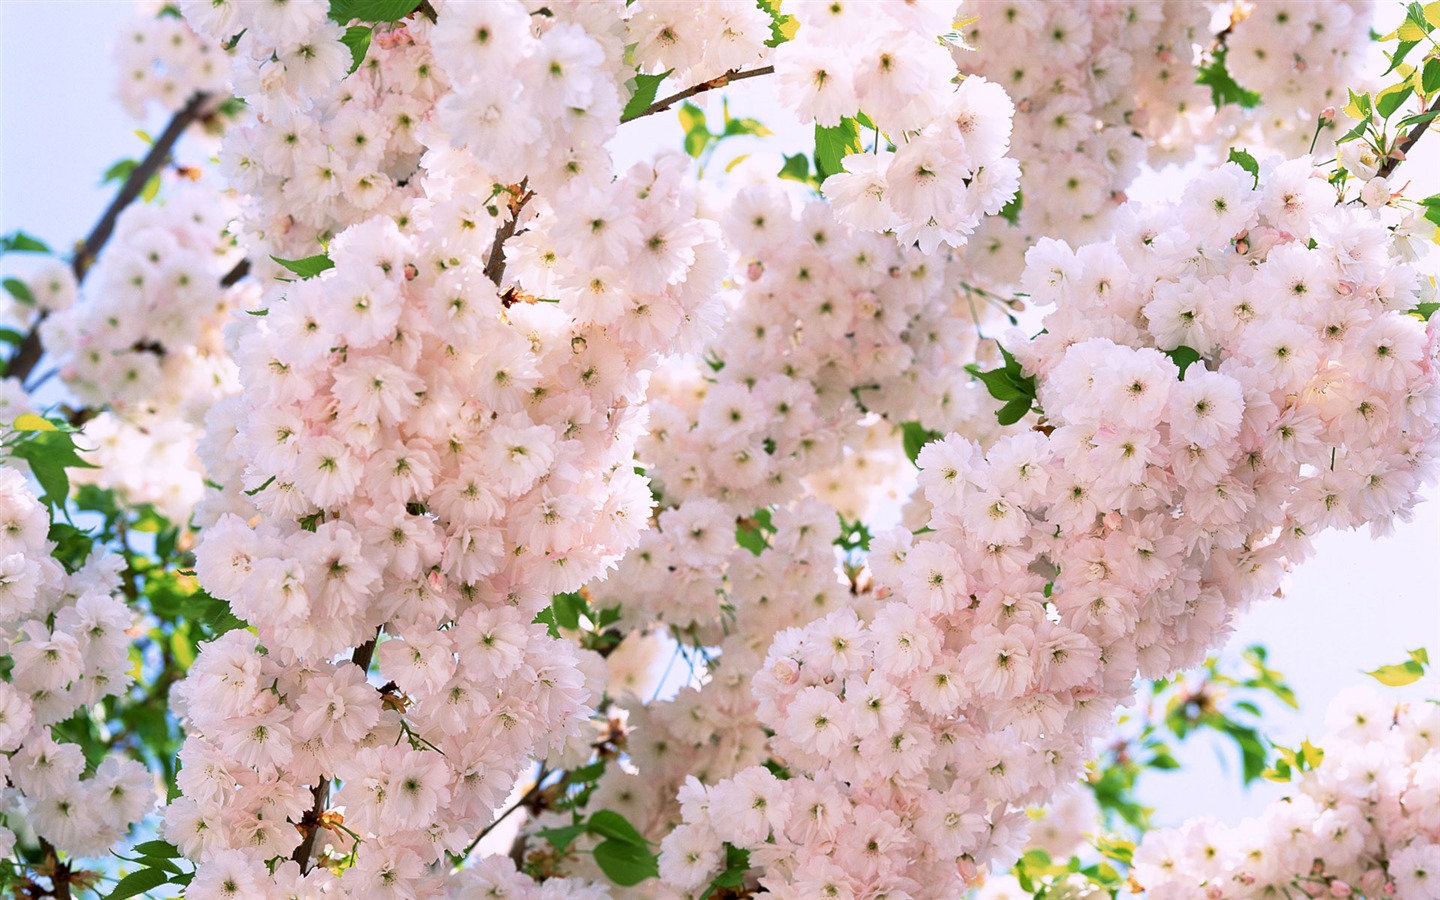 Flowers close-up (16) #14 - 1440x900